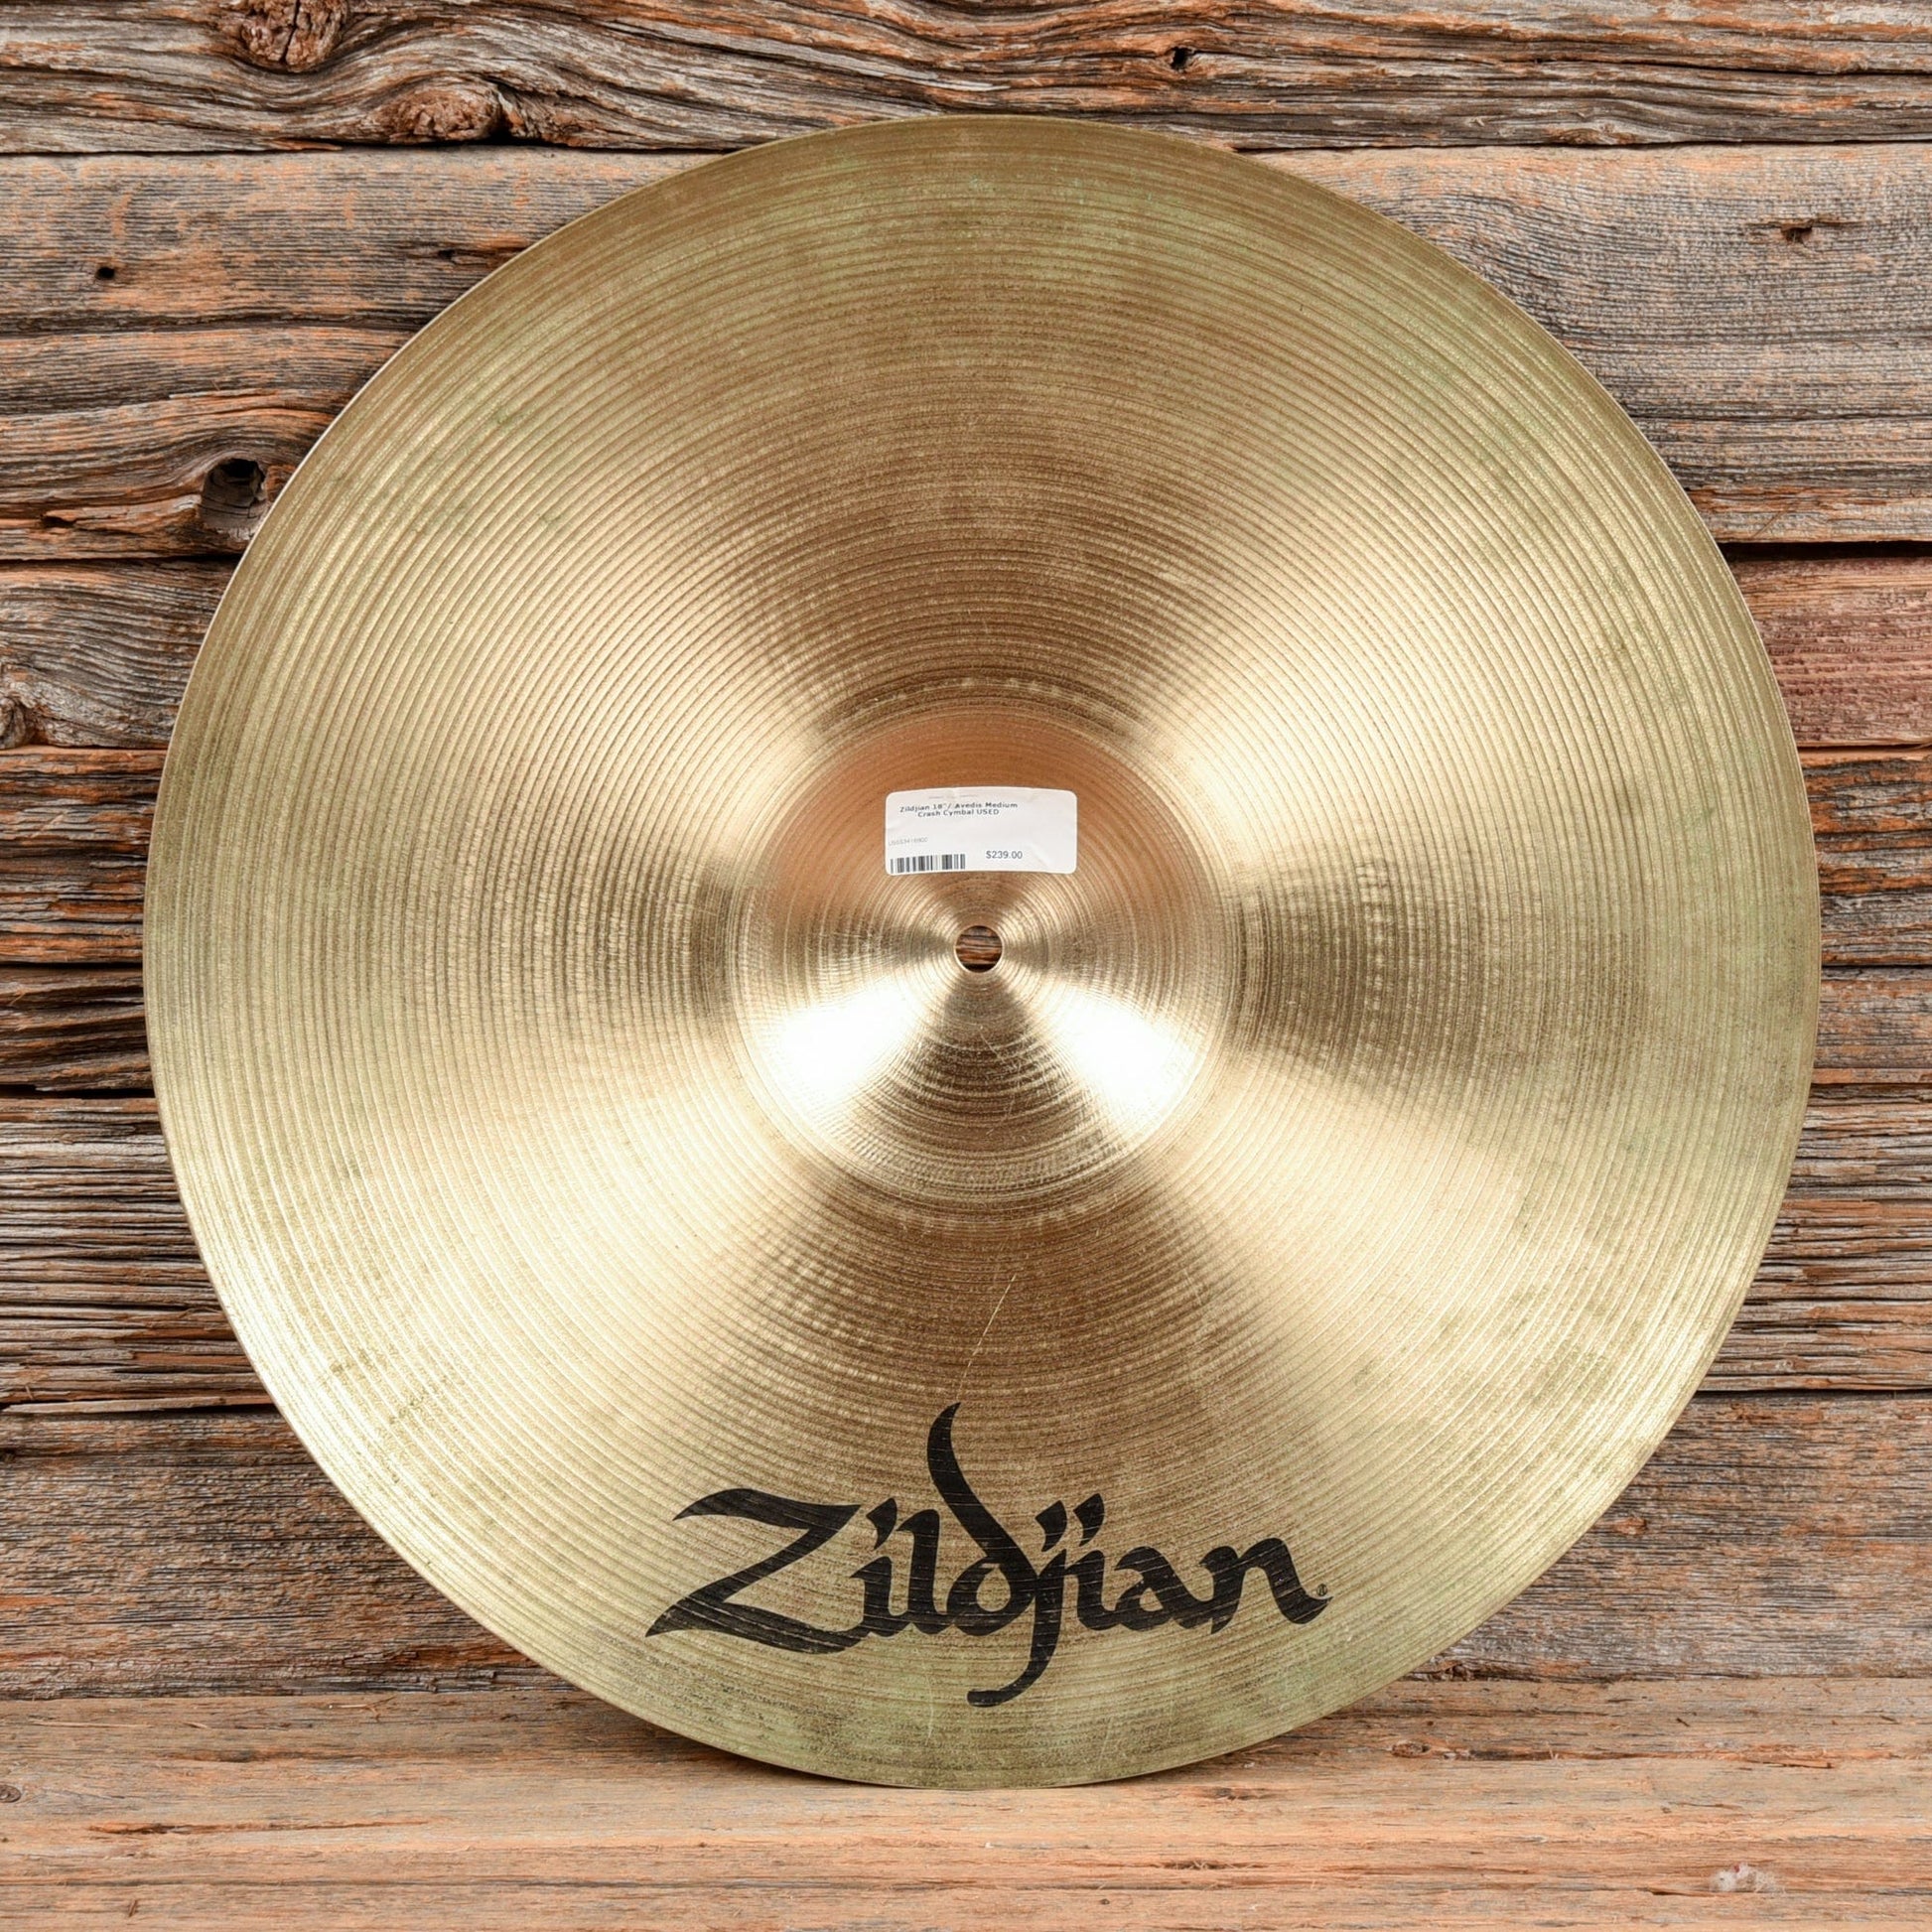 Zildjian 18"/ Avedis Medium Crash Cymbal USED Drums and Percussion